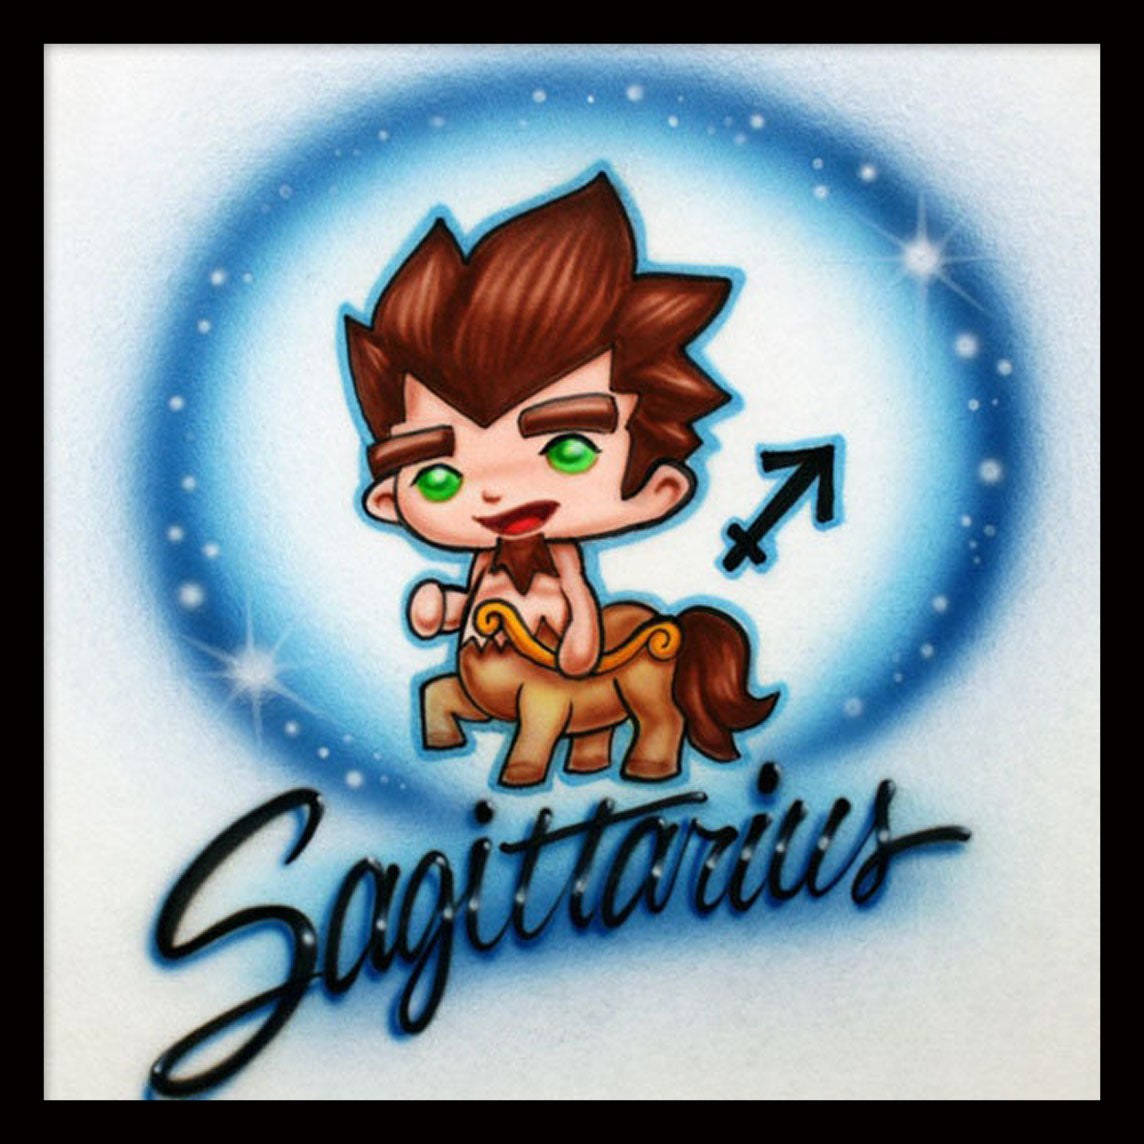 Airbrush T-Shirt - the word "Sagittarius" with a zodiac emblem and a cartoon centaur